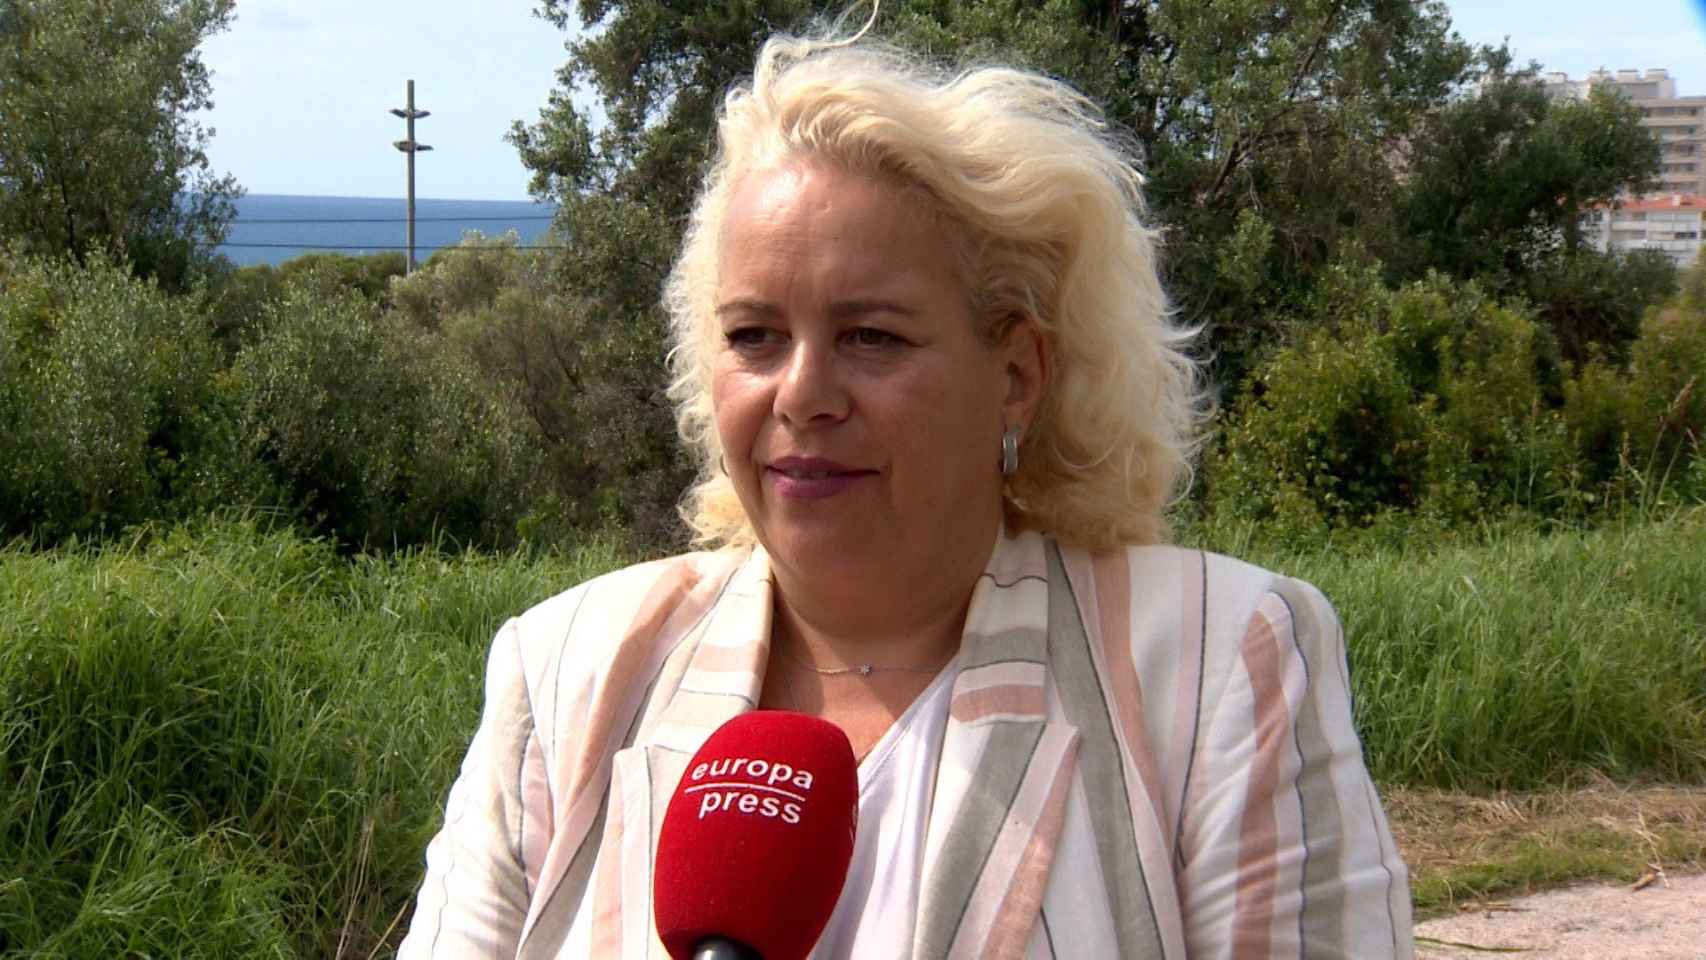 La presidenta del Consejo Comarcal del Garraf (Barcelona), Mònica Gallardo / EUROPA PRESS